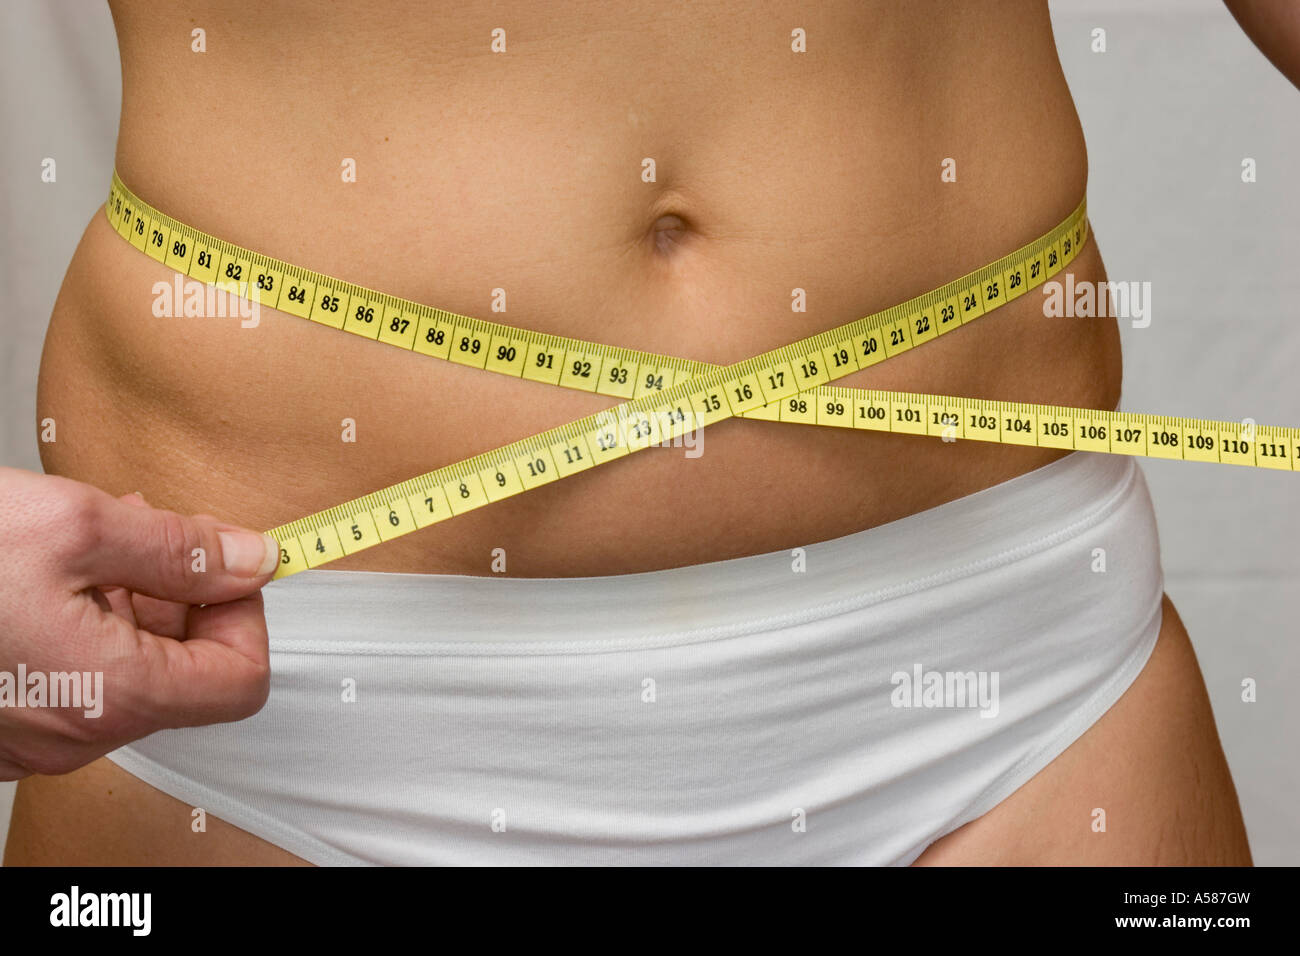 Fettleibigkeit hi-res stock photography and images - Alamy